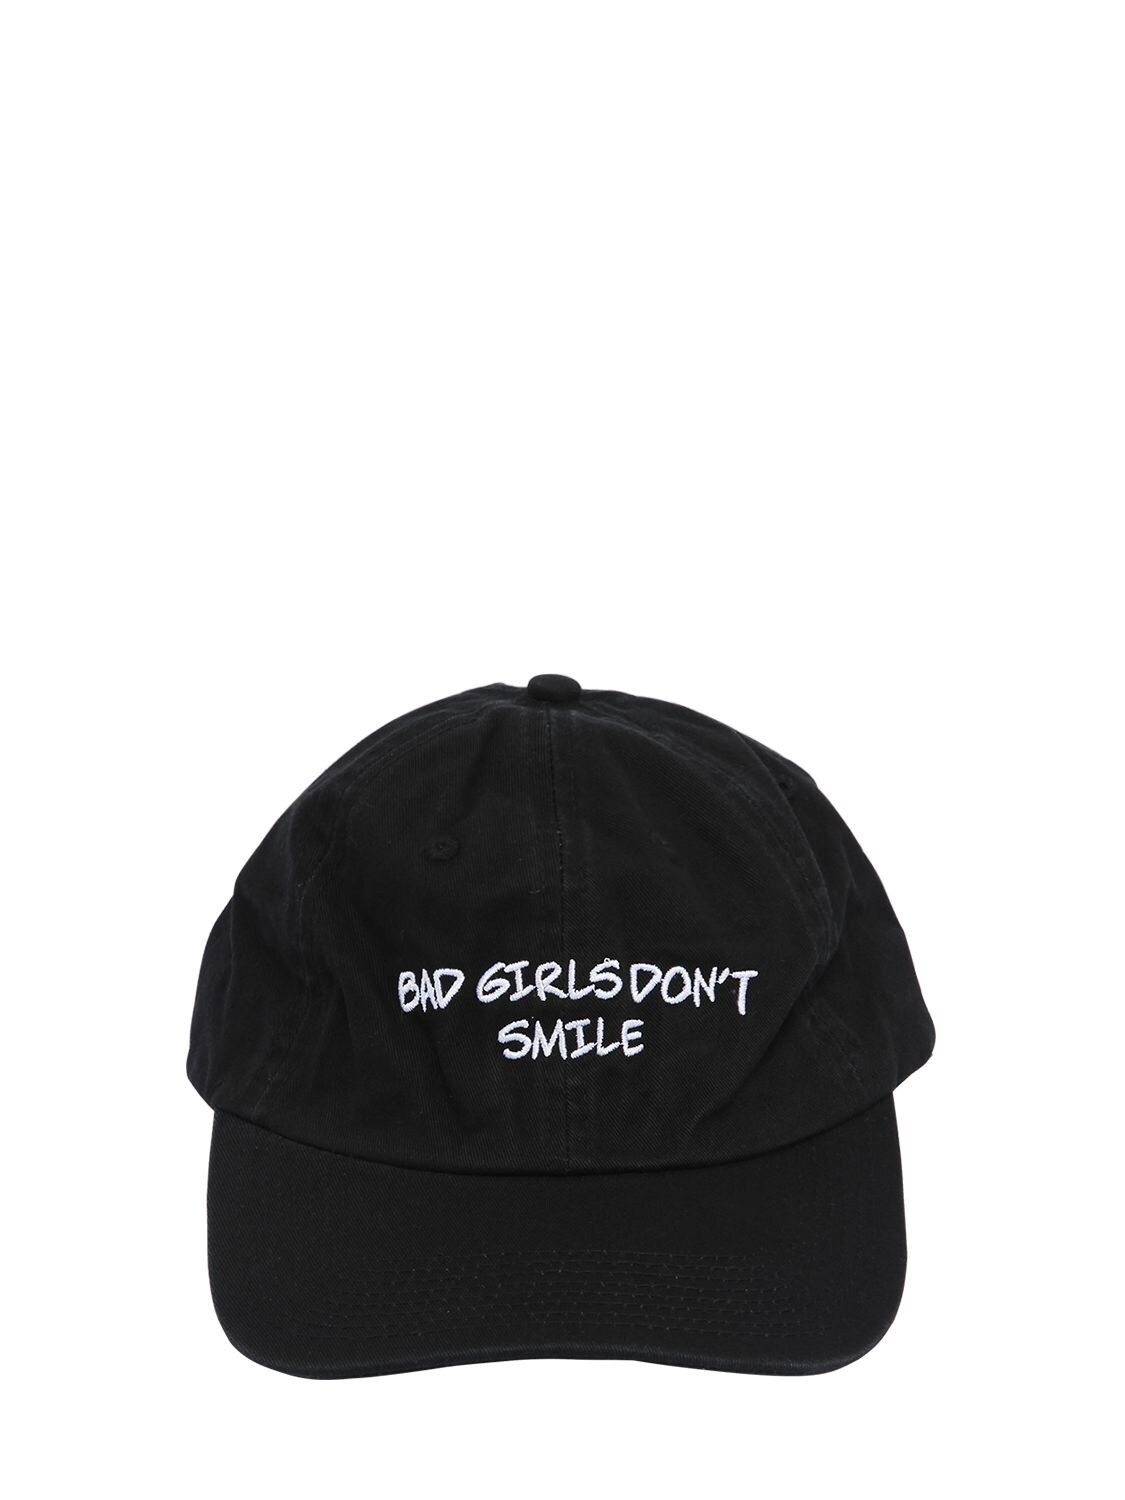 Nasaseasons Bad Girls Don't Smile Embroidered Hat In Black